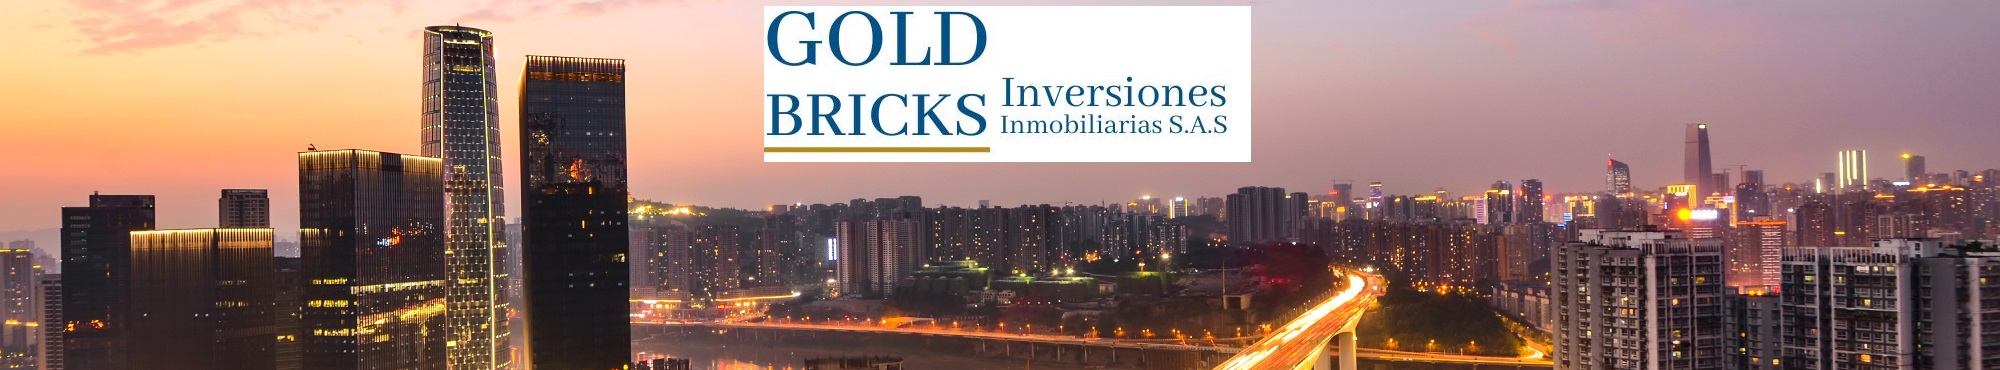 Micrositio de GOLD BRICKS Inversiones 